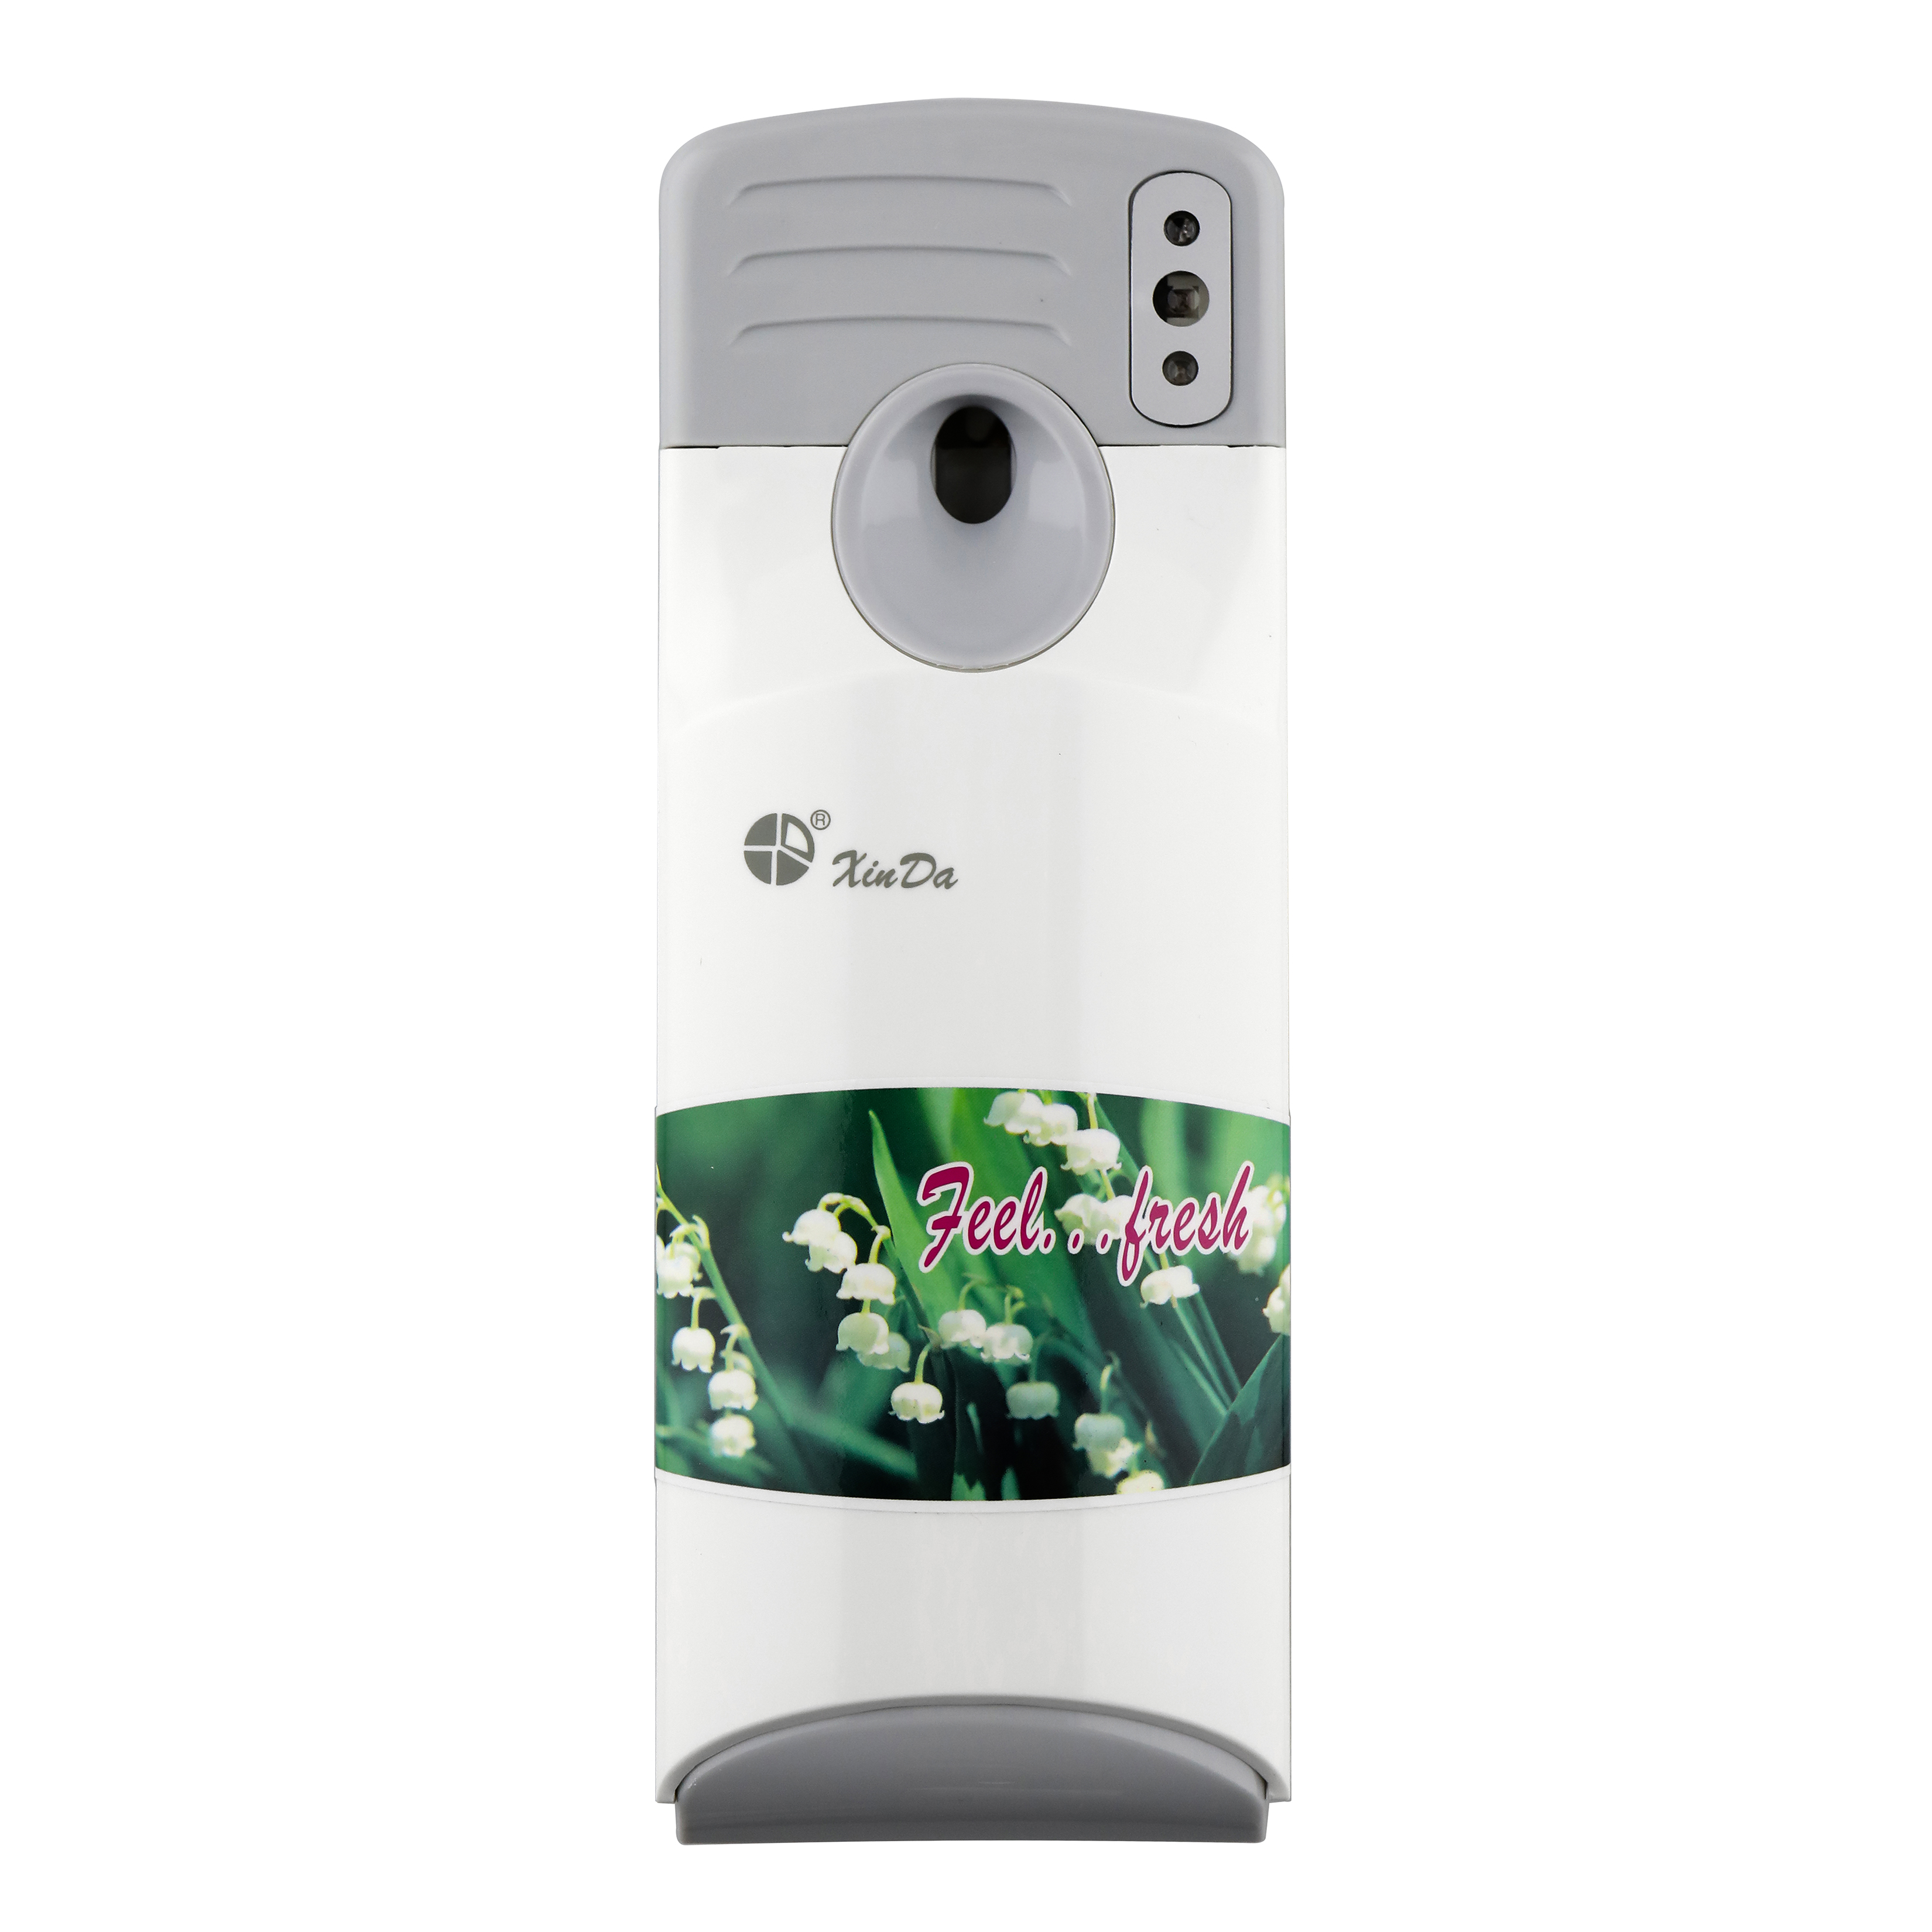 Automatic Deodorizer Room Battery Refillable Fragrance Diffuser Air Freshener Perfume Dispenser Air Purifi